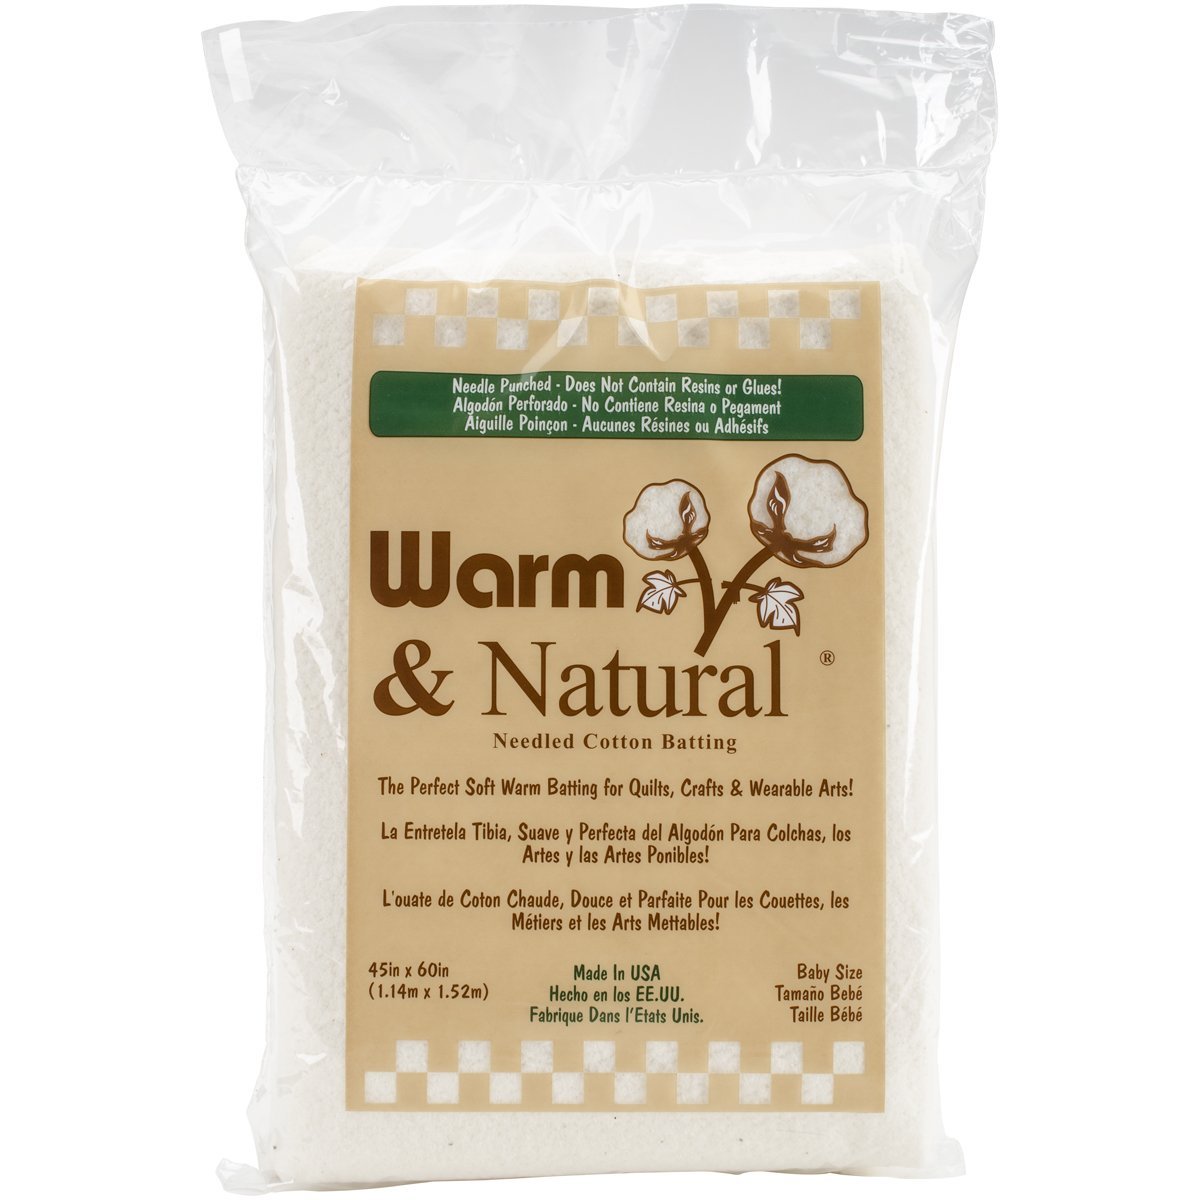 Warm & Natural Cotton Batting - Twin Size - 72 inch x 90 inch